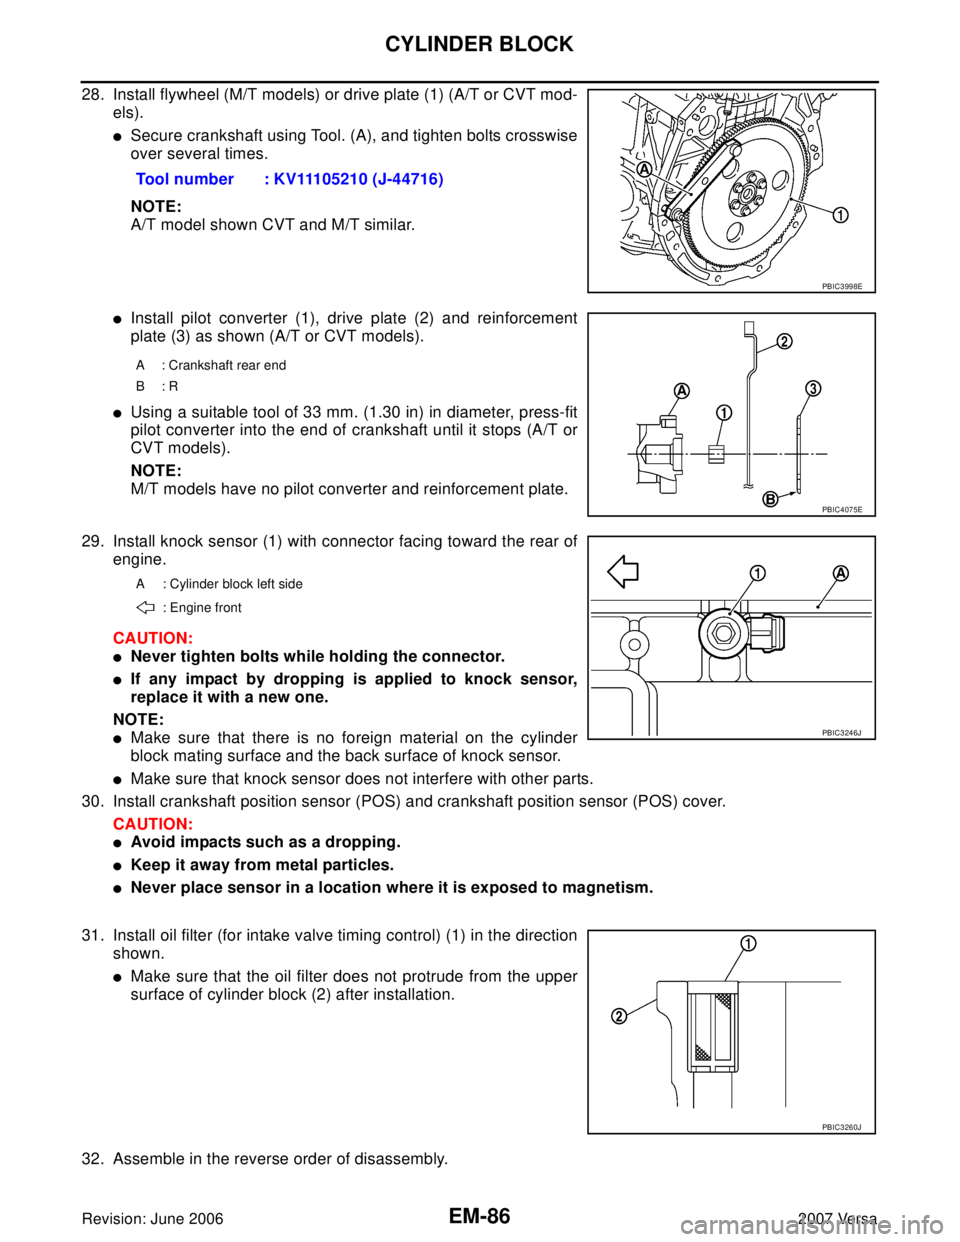 NISSAN TIIDA 2007  Service Service Manual EM-86Revision: June 2006
CYLINDER BLOCK
2007 Versa
28. Install flywheel (M/T models) or drive plate (1) (A/T or CVT mod-
els).
Secure crankshaft using Tool. (A), and tighten bolts crosswise
over seve